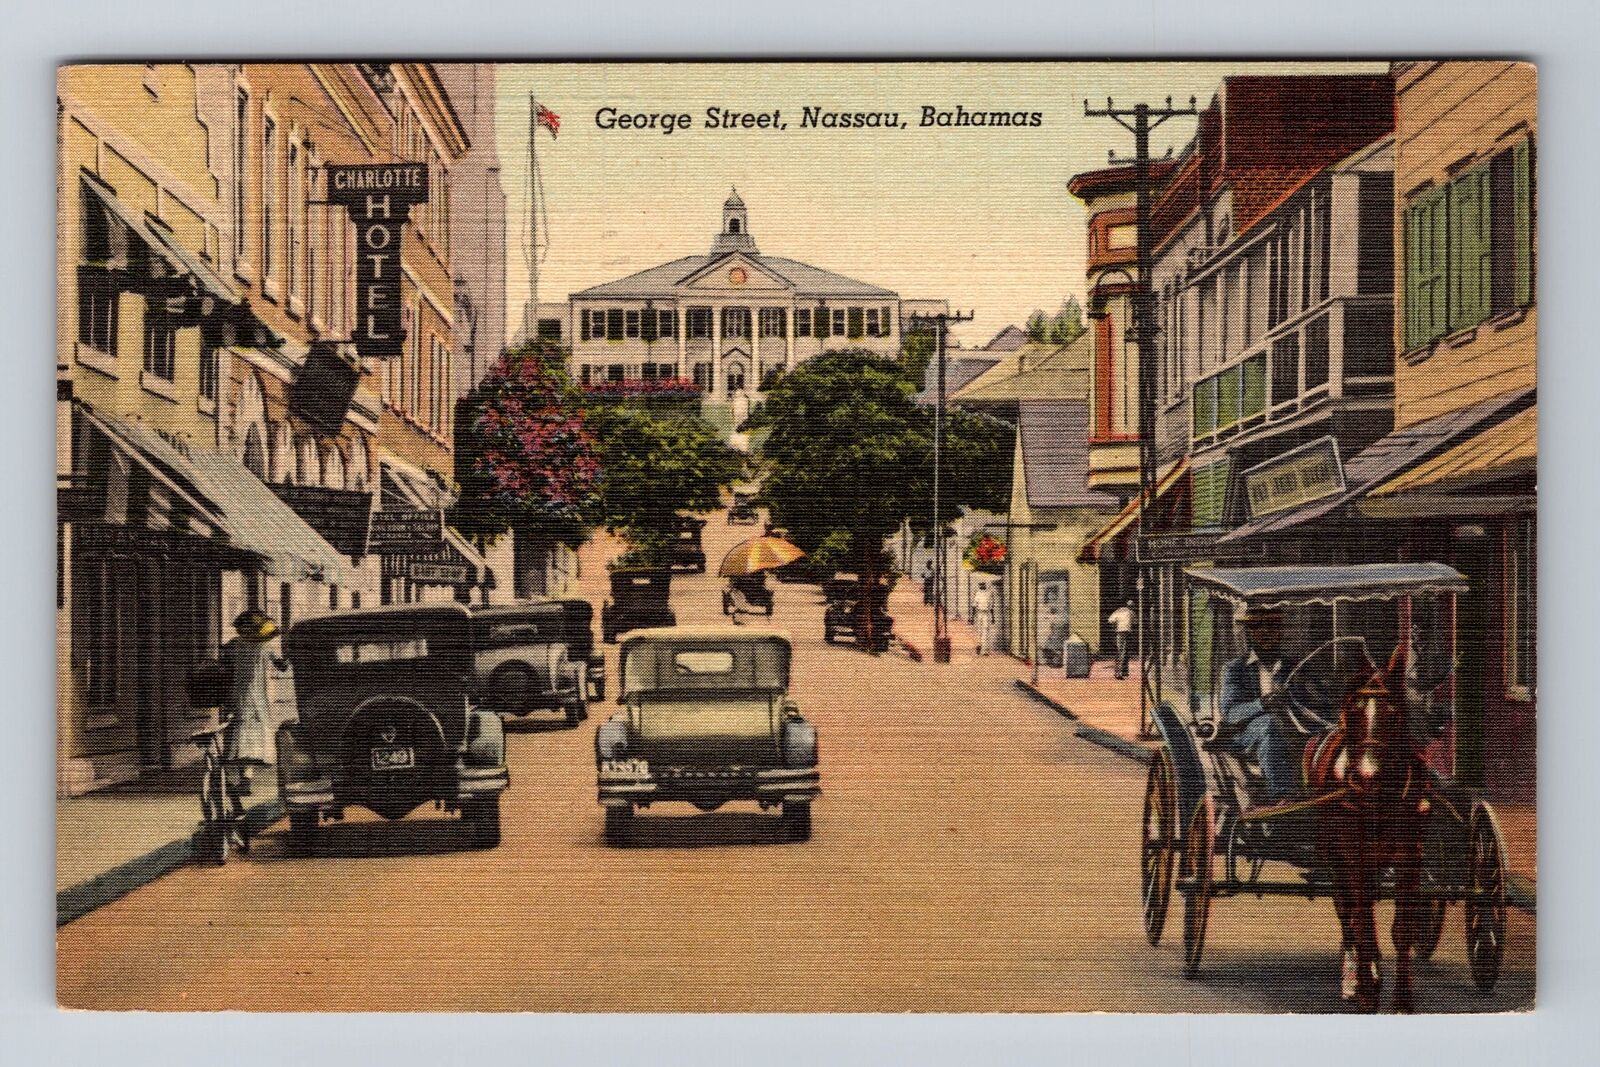 Nassau-Bahamas, Main Business District, George Street, Vintage Postcard